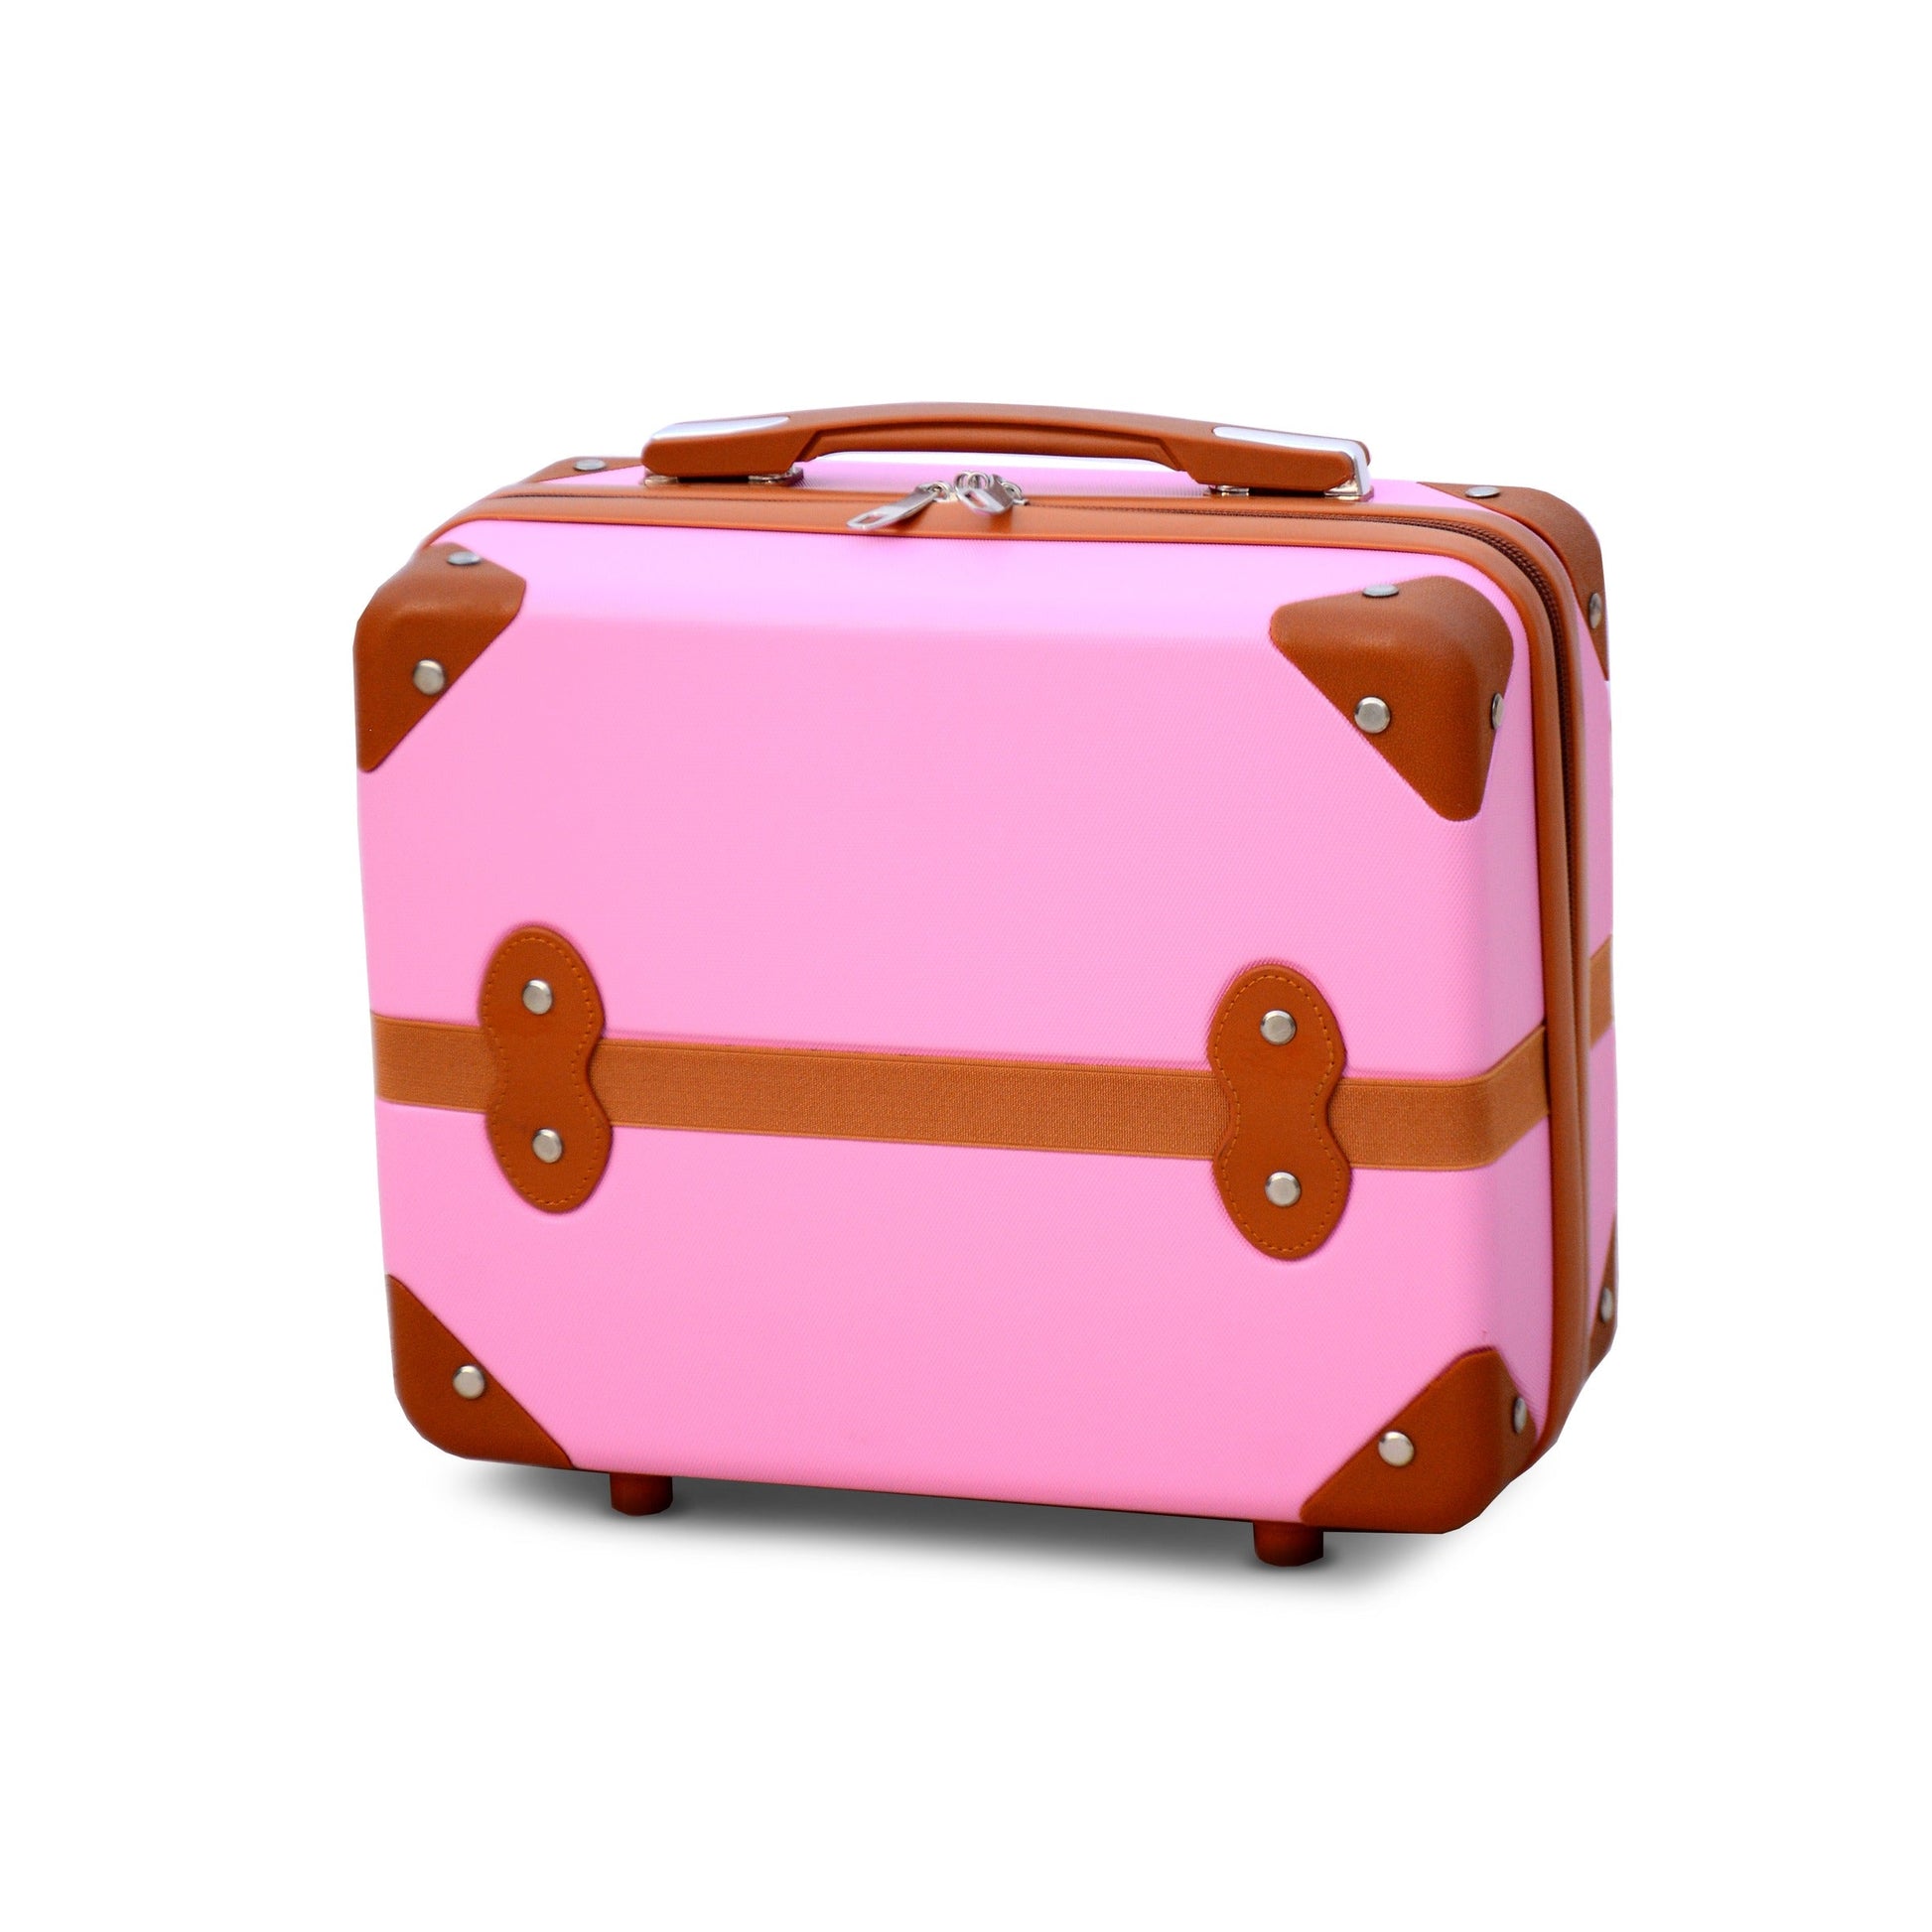 Corner guard lightweight low price pink colour beauty box